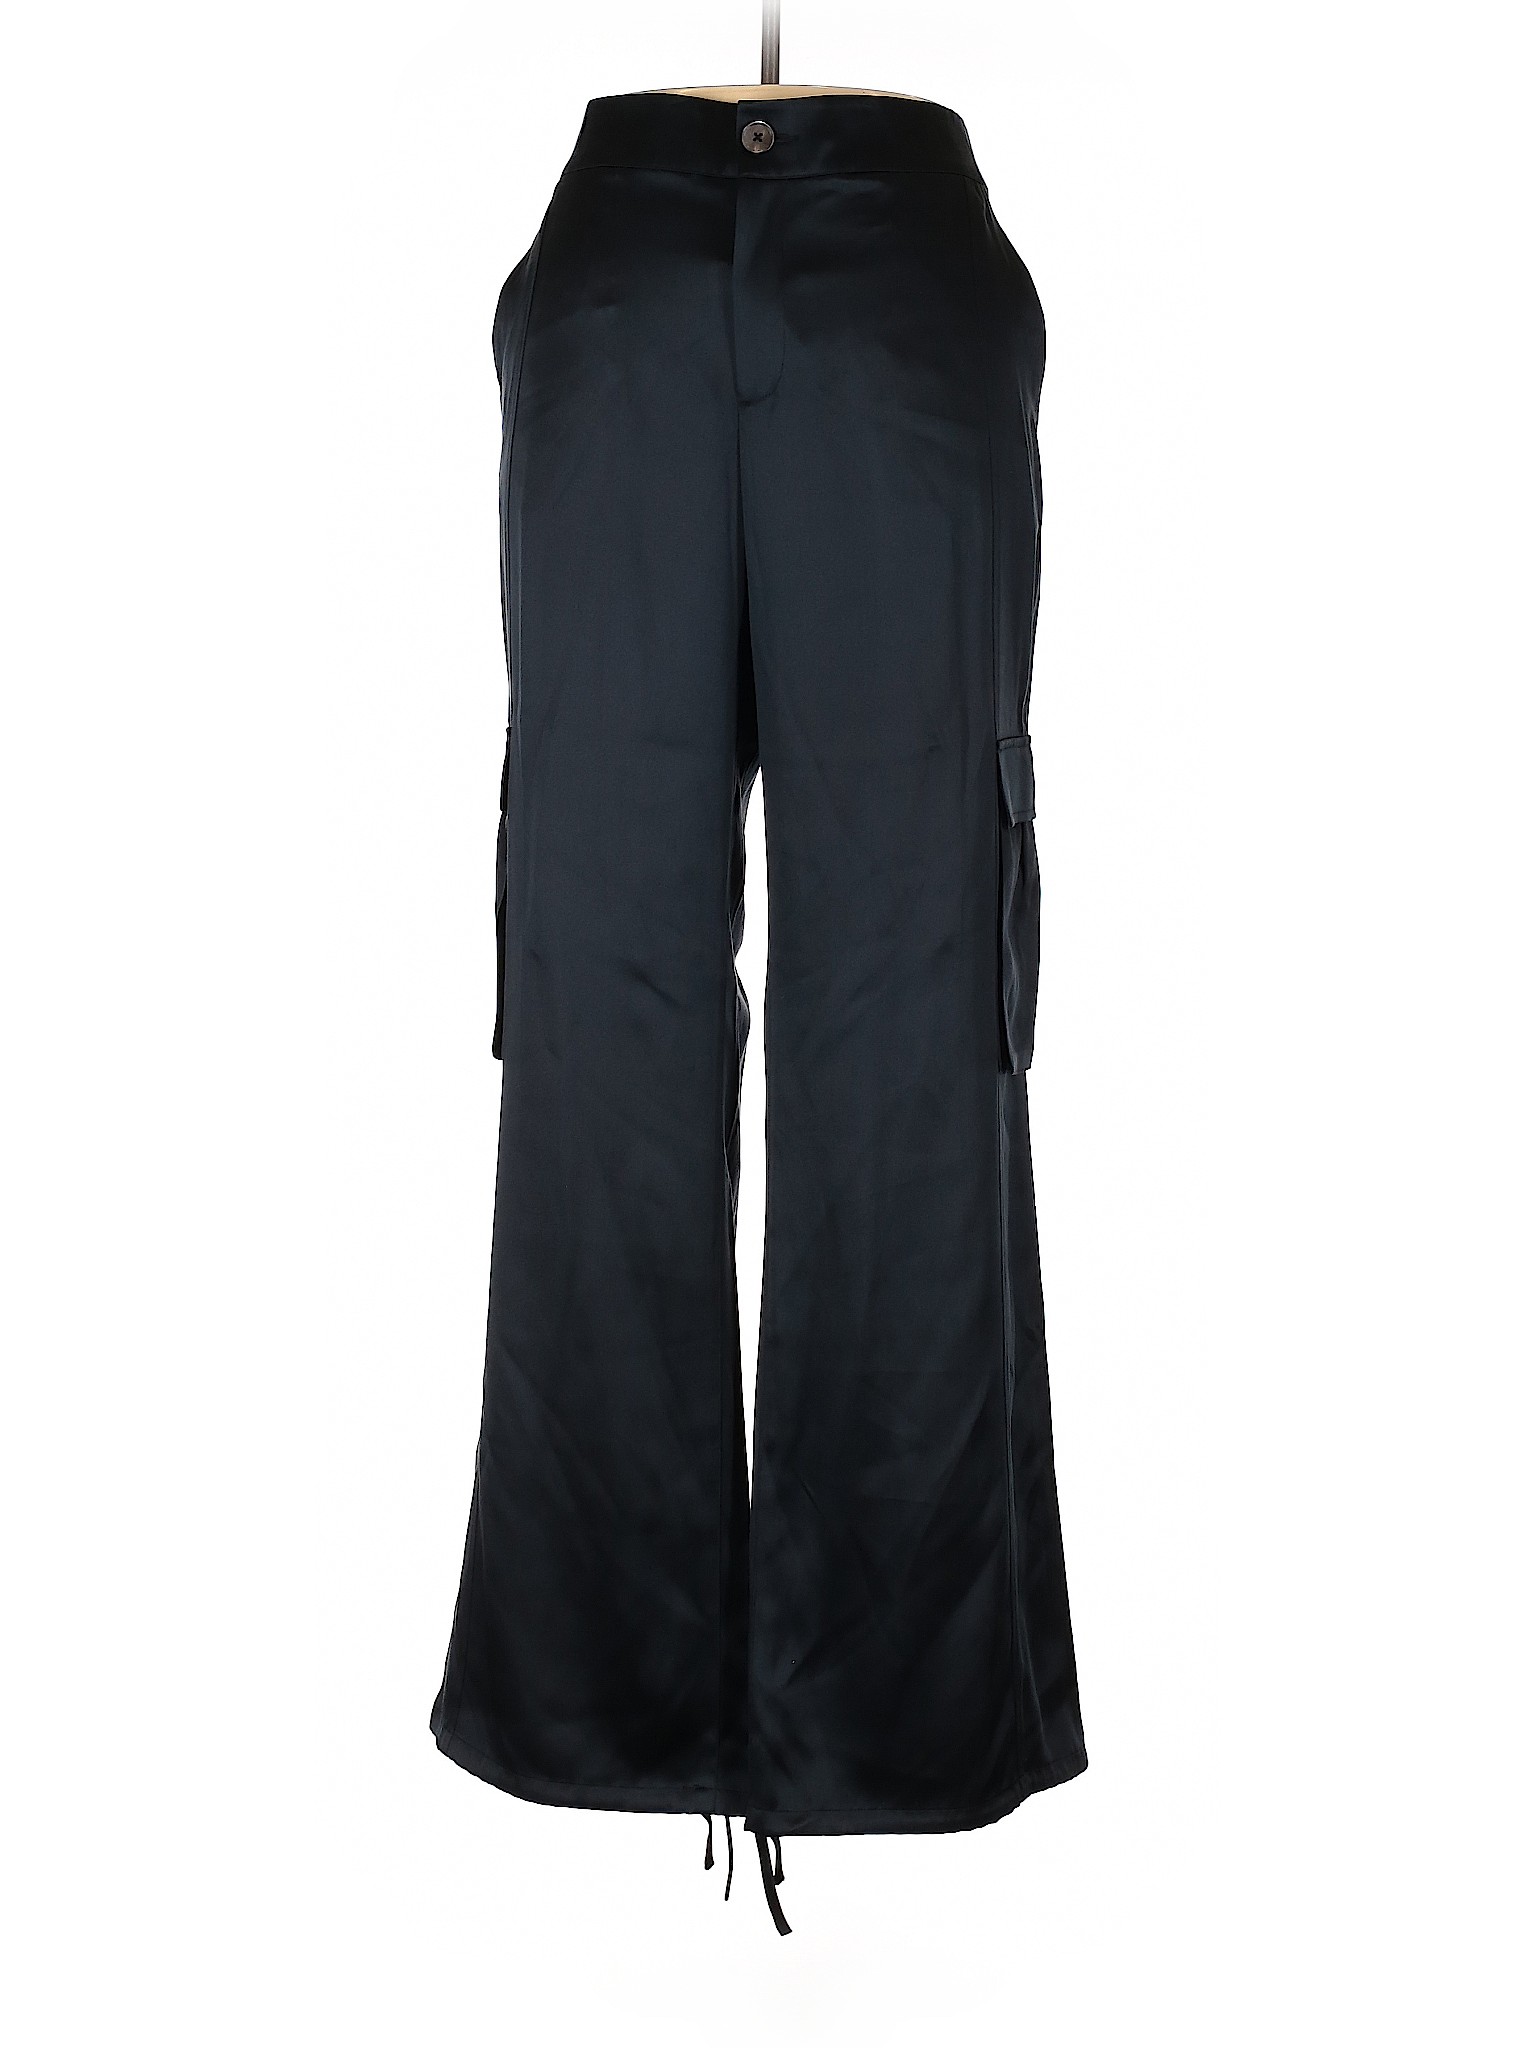 NWT Banana Republic Women Black Silk Pants 16 | eBay